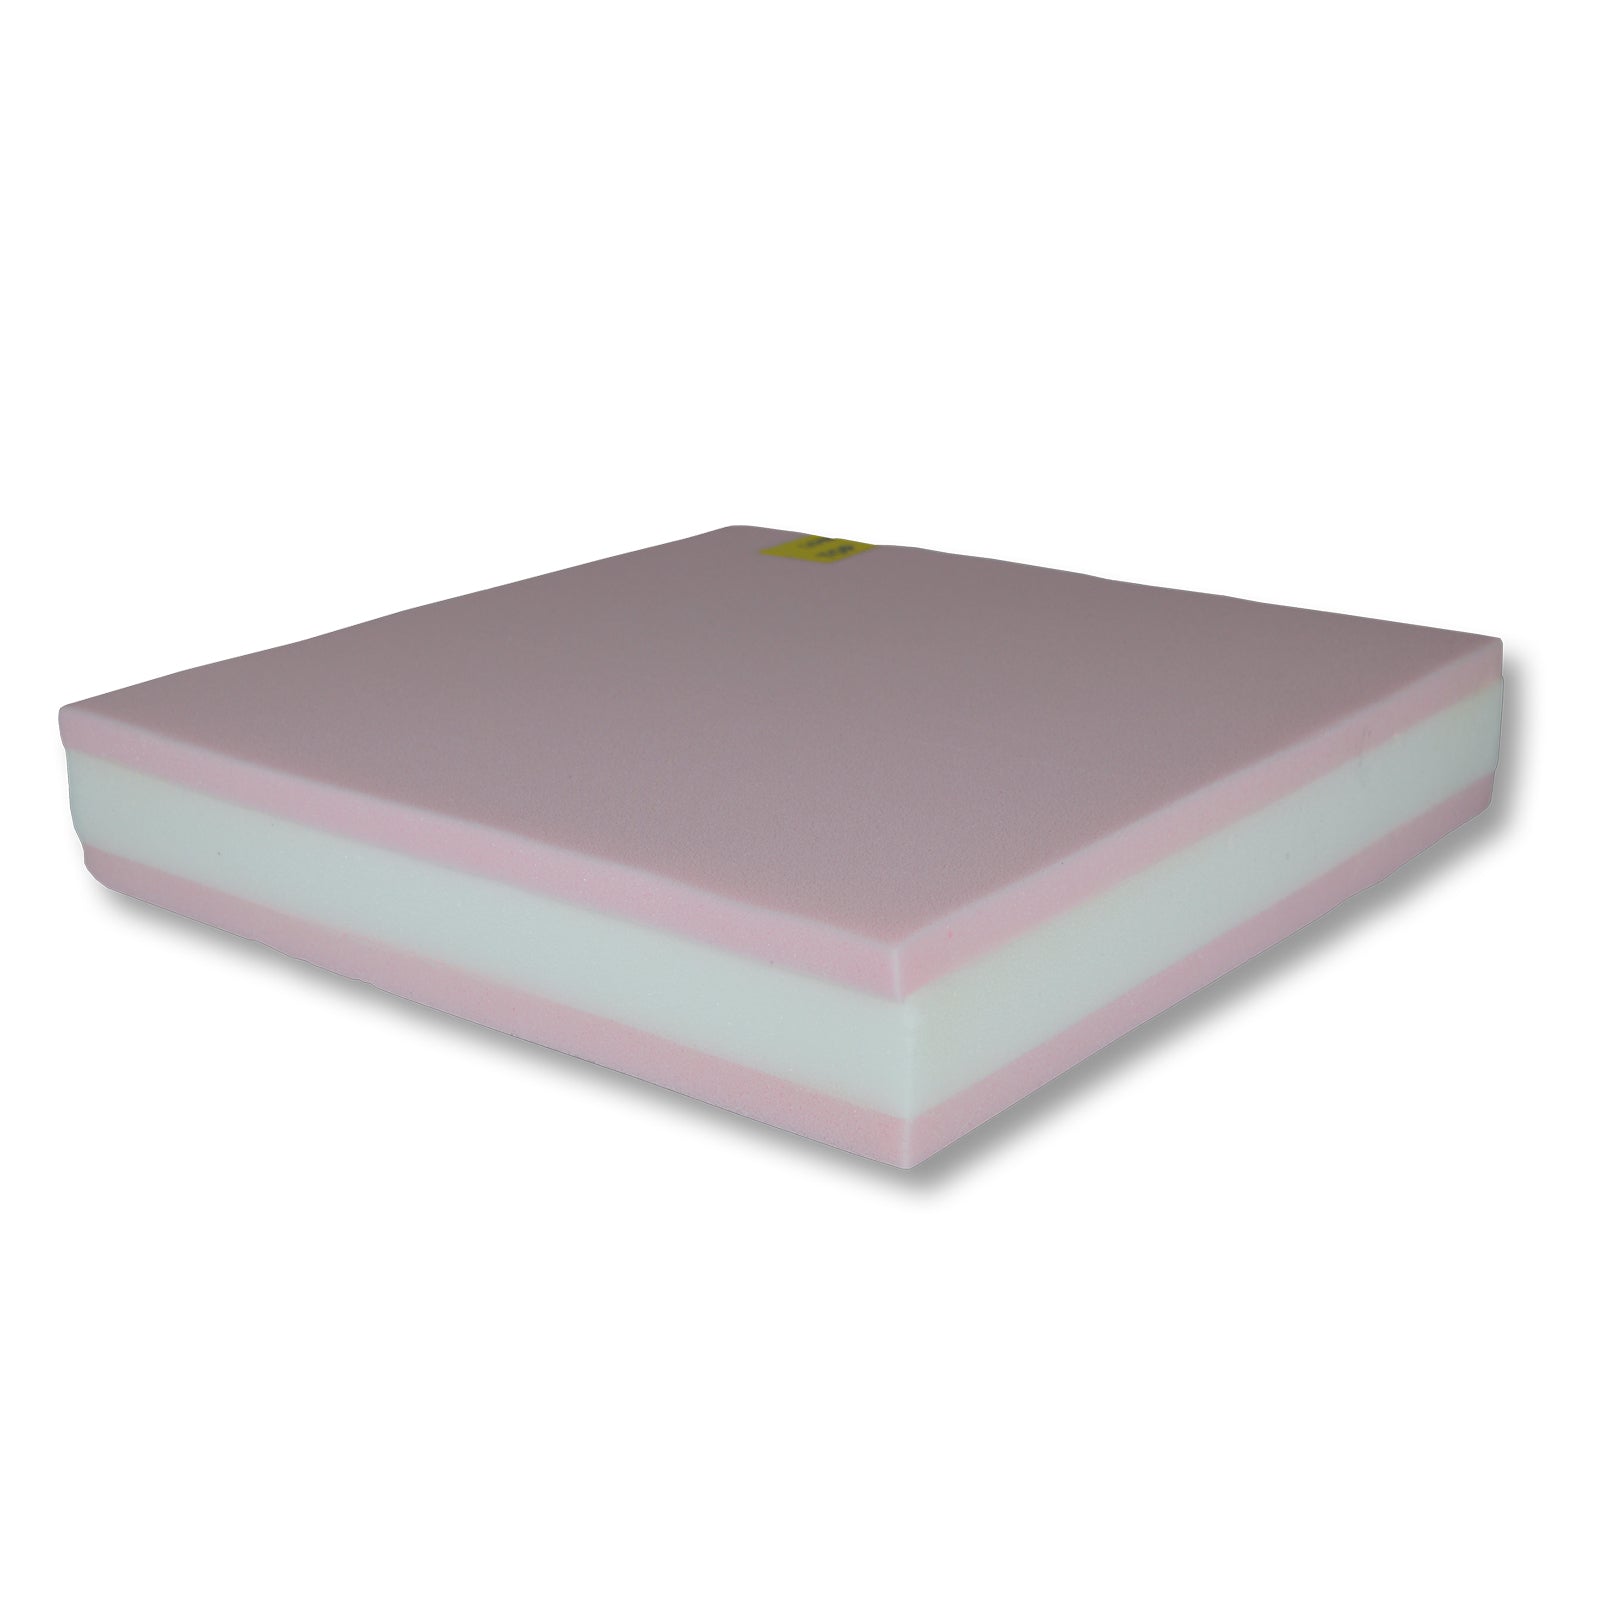 Lowzone Switch Memory Foam Cushion - Optimal Support